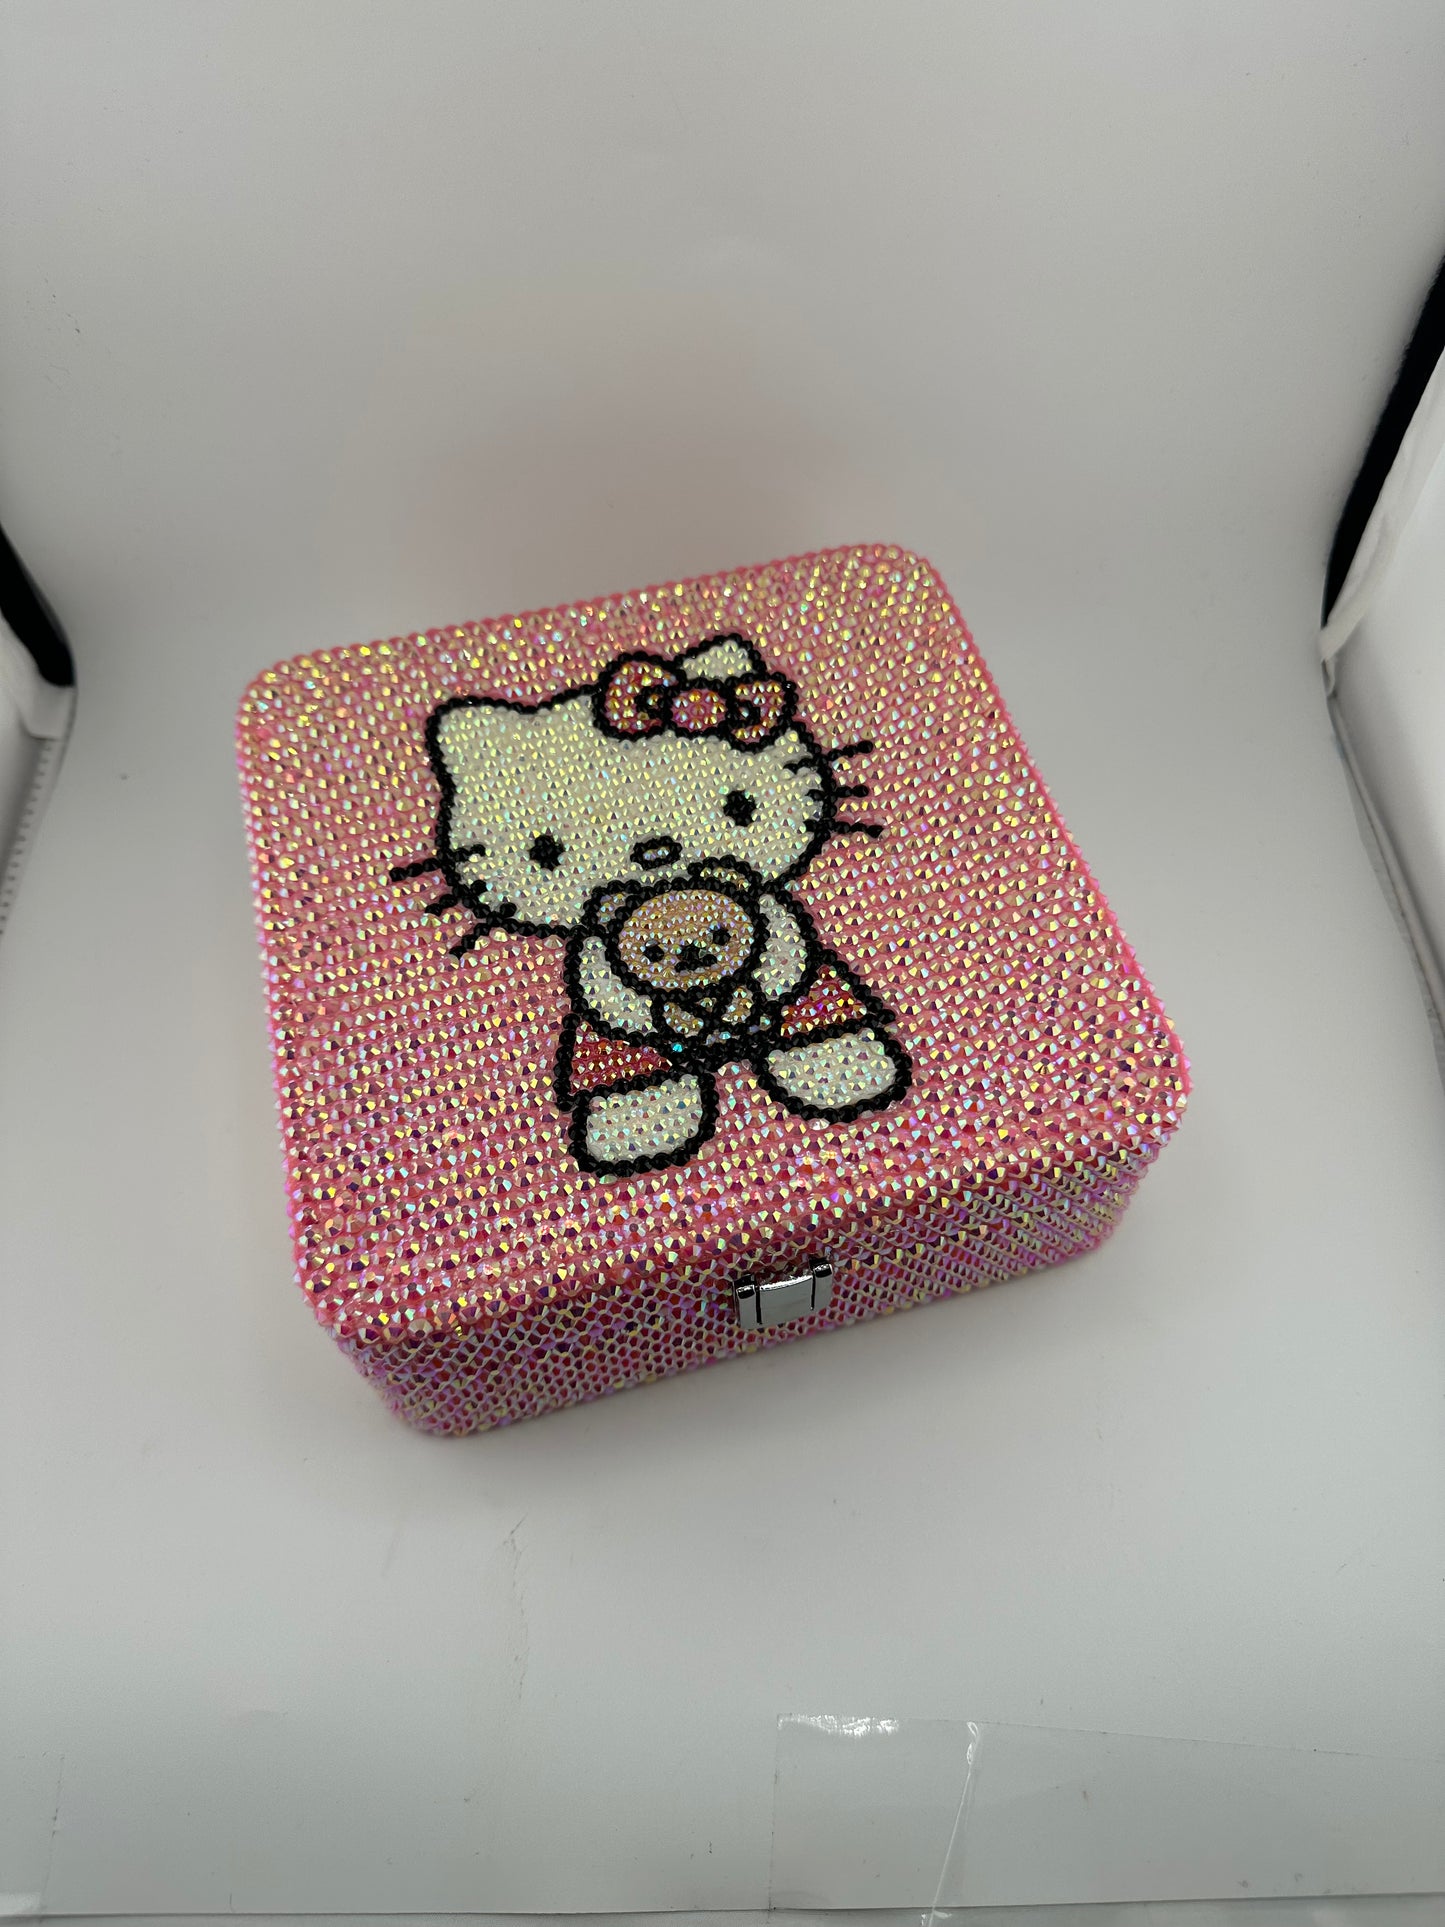 Hello Kitty Bling Large Jewelry Box